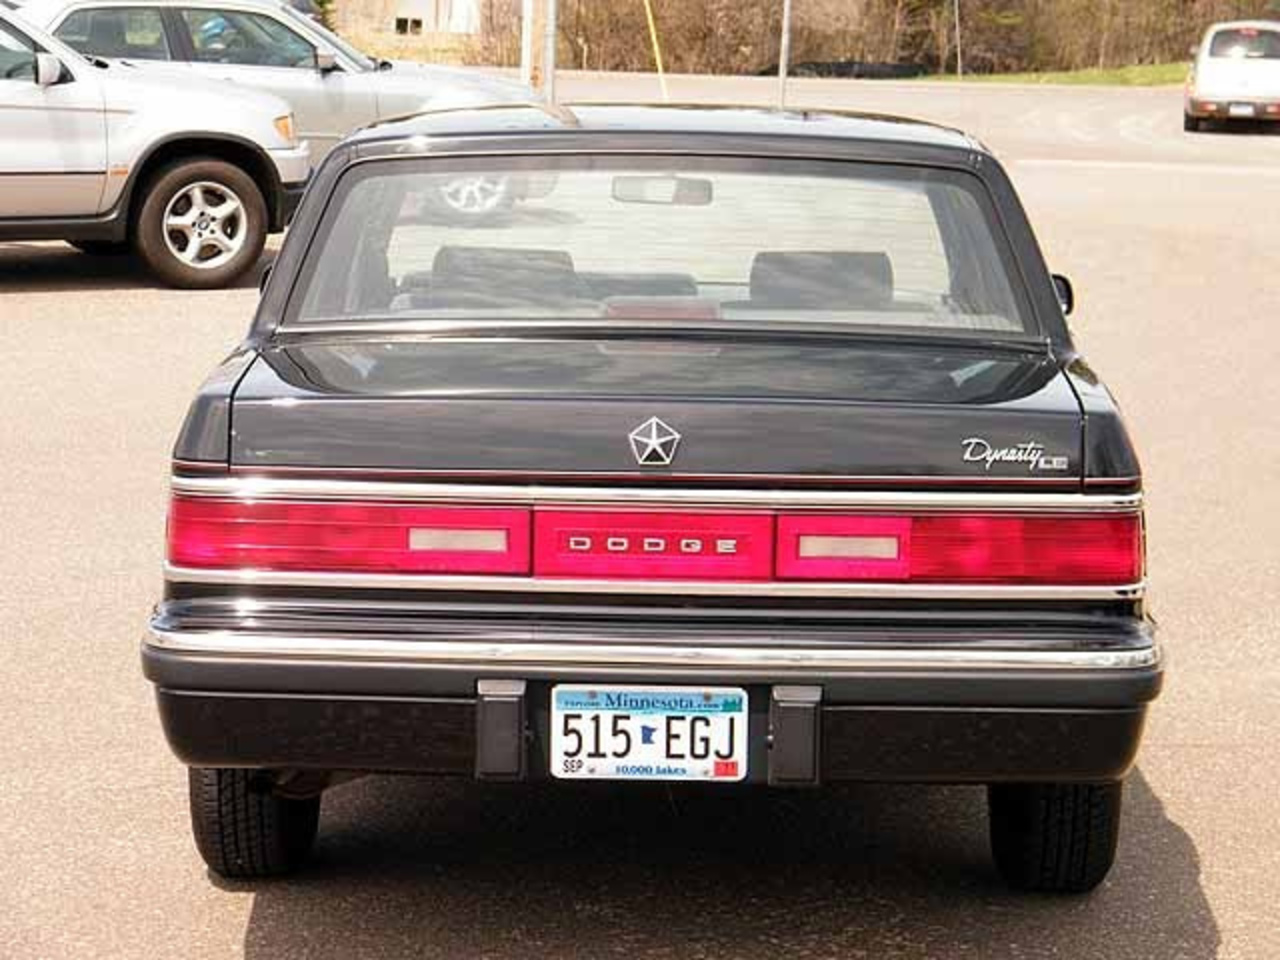 1989 Dodge Dynasty | Flickr - Photo Sharing!